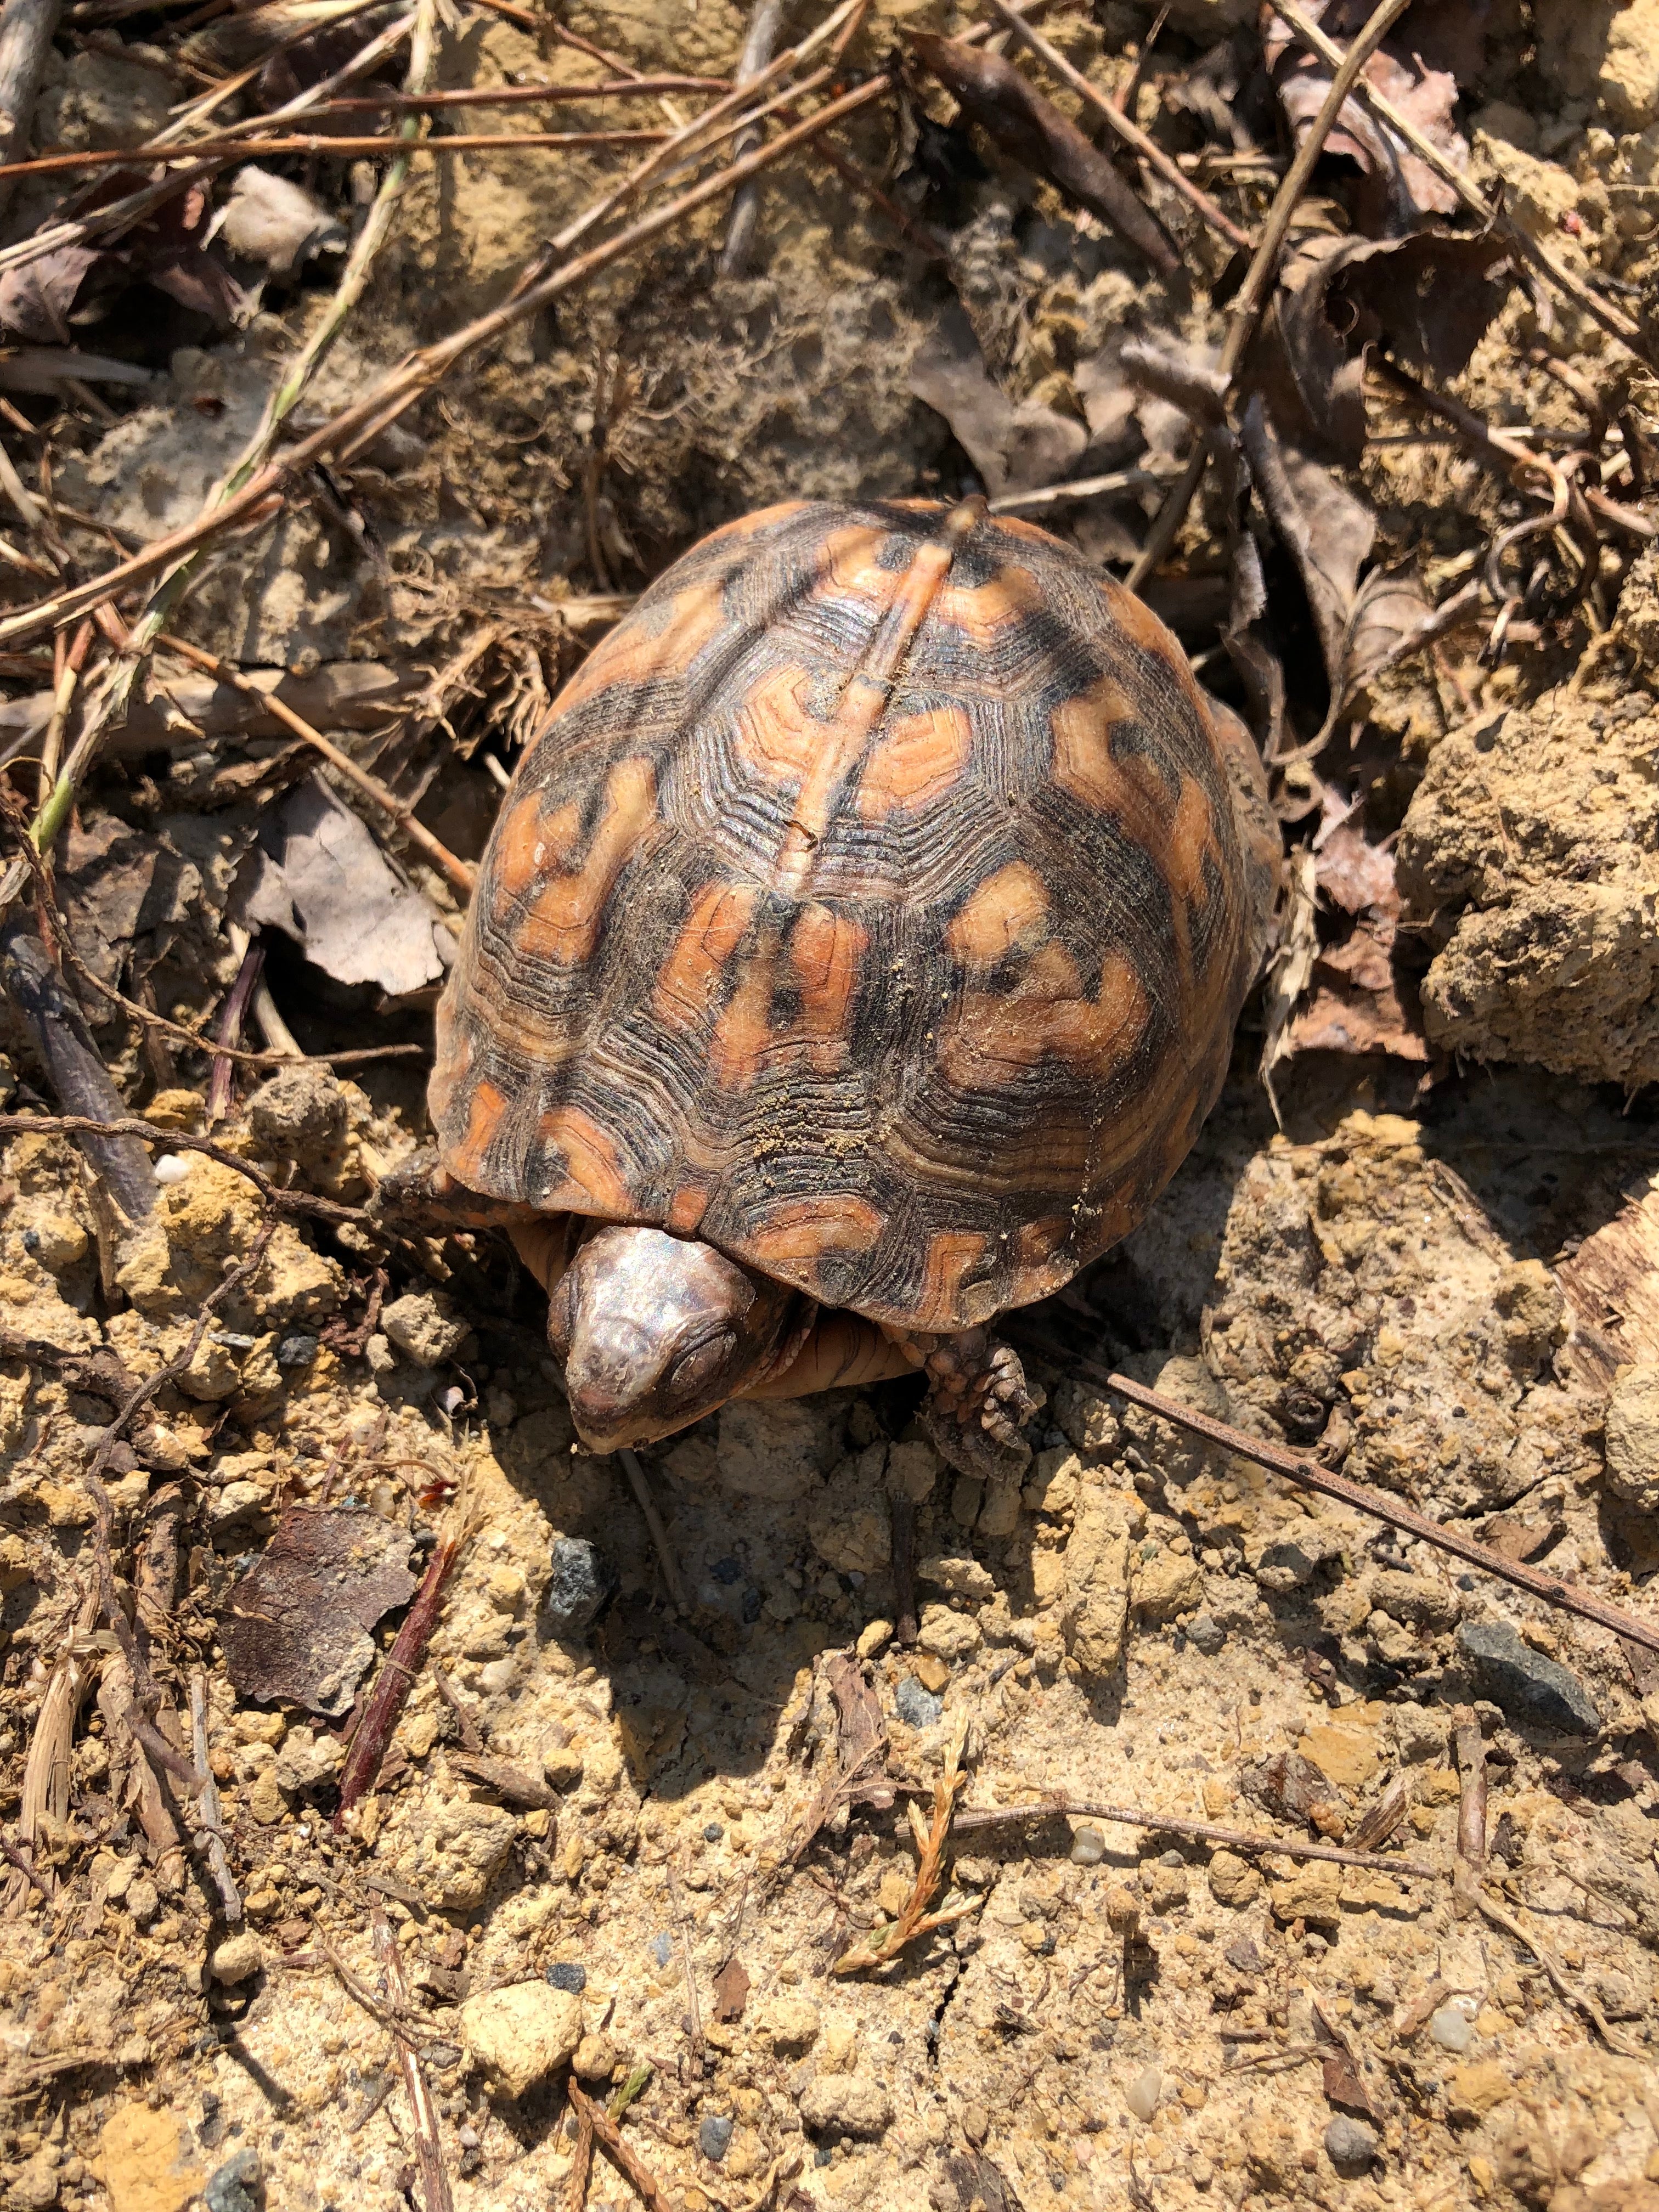 one of the resident tortoises at Tide Mill Resort